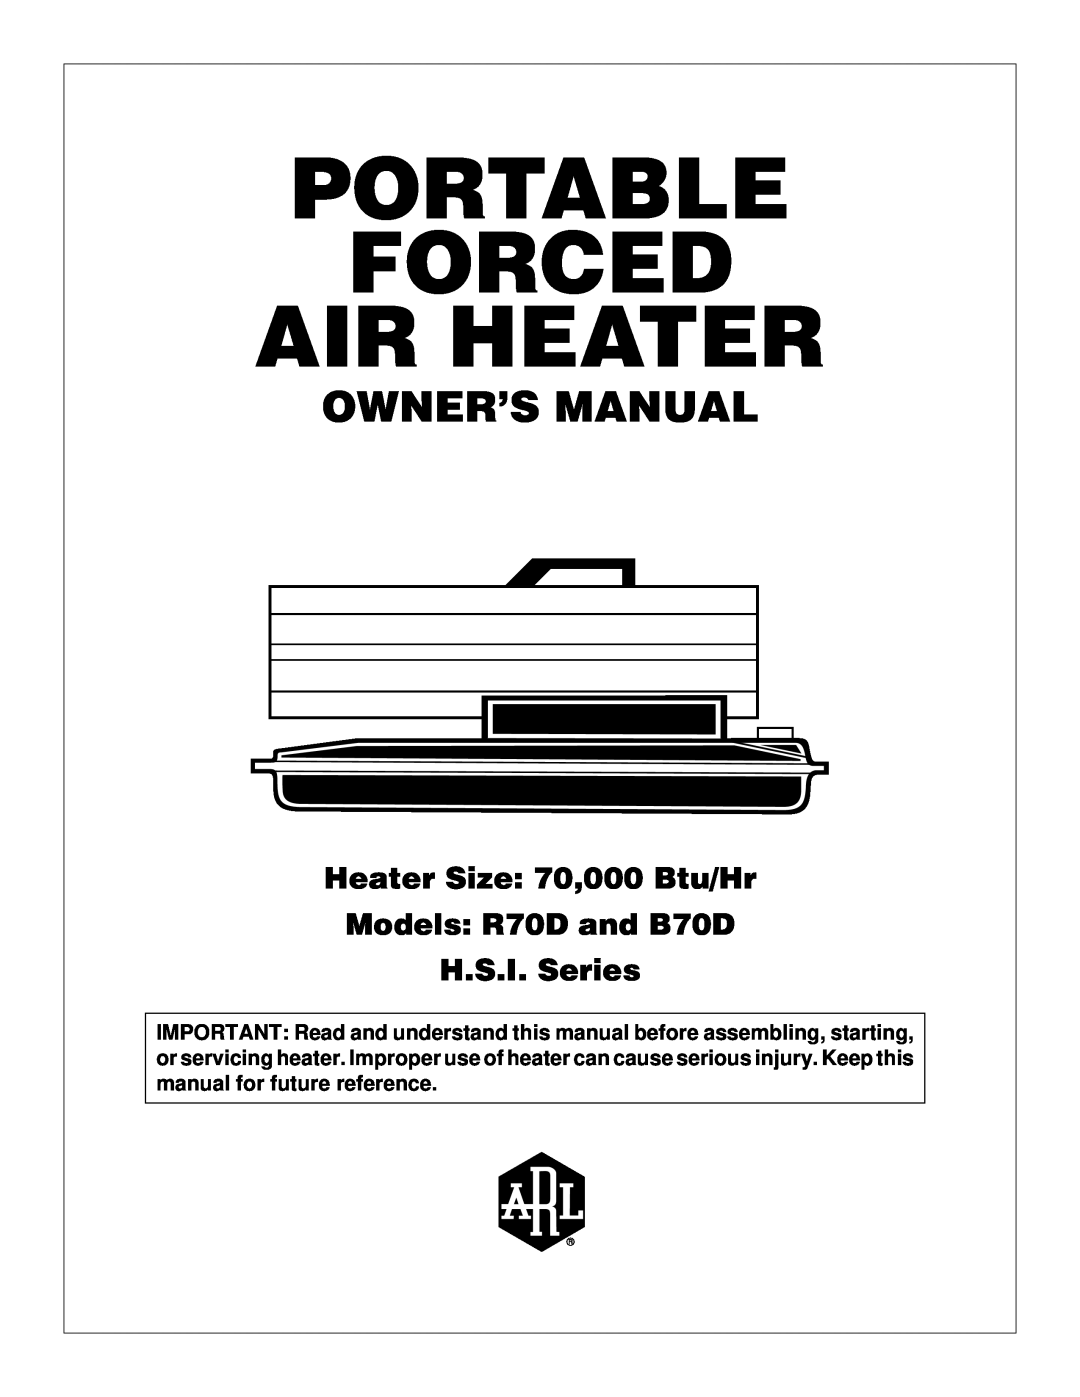 Desa owner manual Portable Forced Air Heater, Heater Size 70,000 Btu/Hr Models R70D and B70D, H.S.I. Series, Arl Logo 